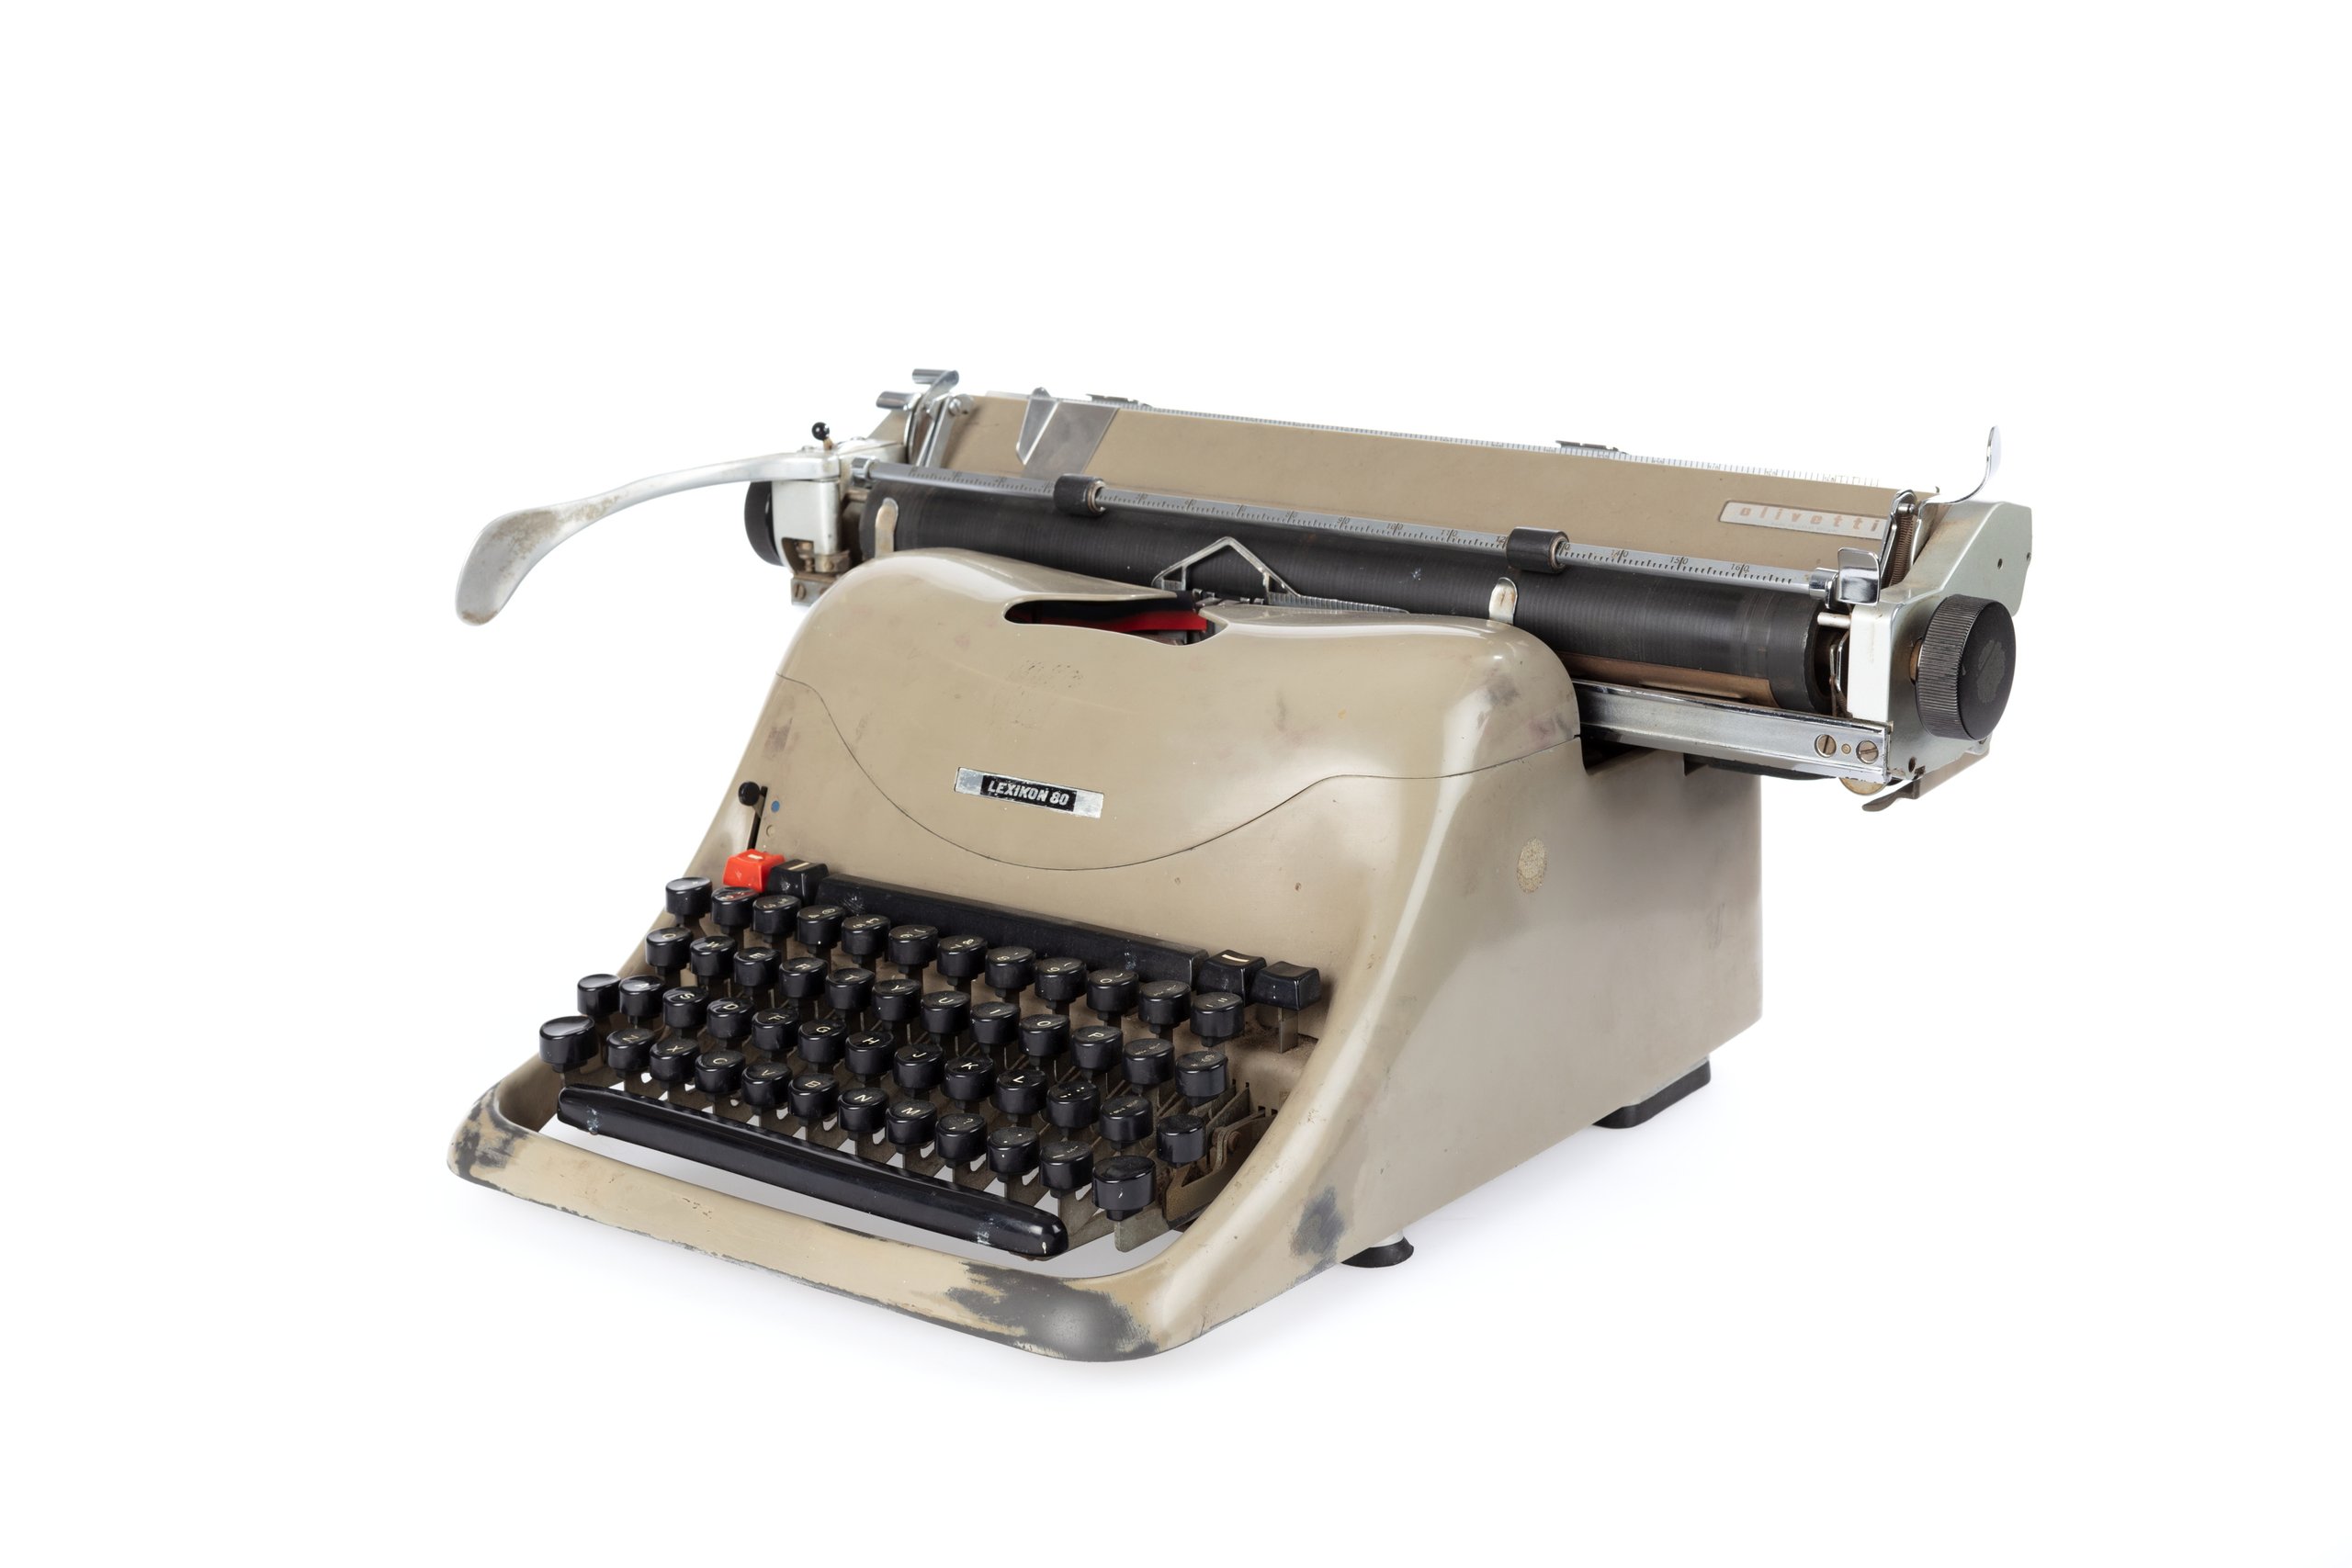 'Lexicon 80' typewriter made by British Olivetti Ltd